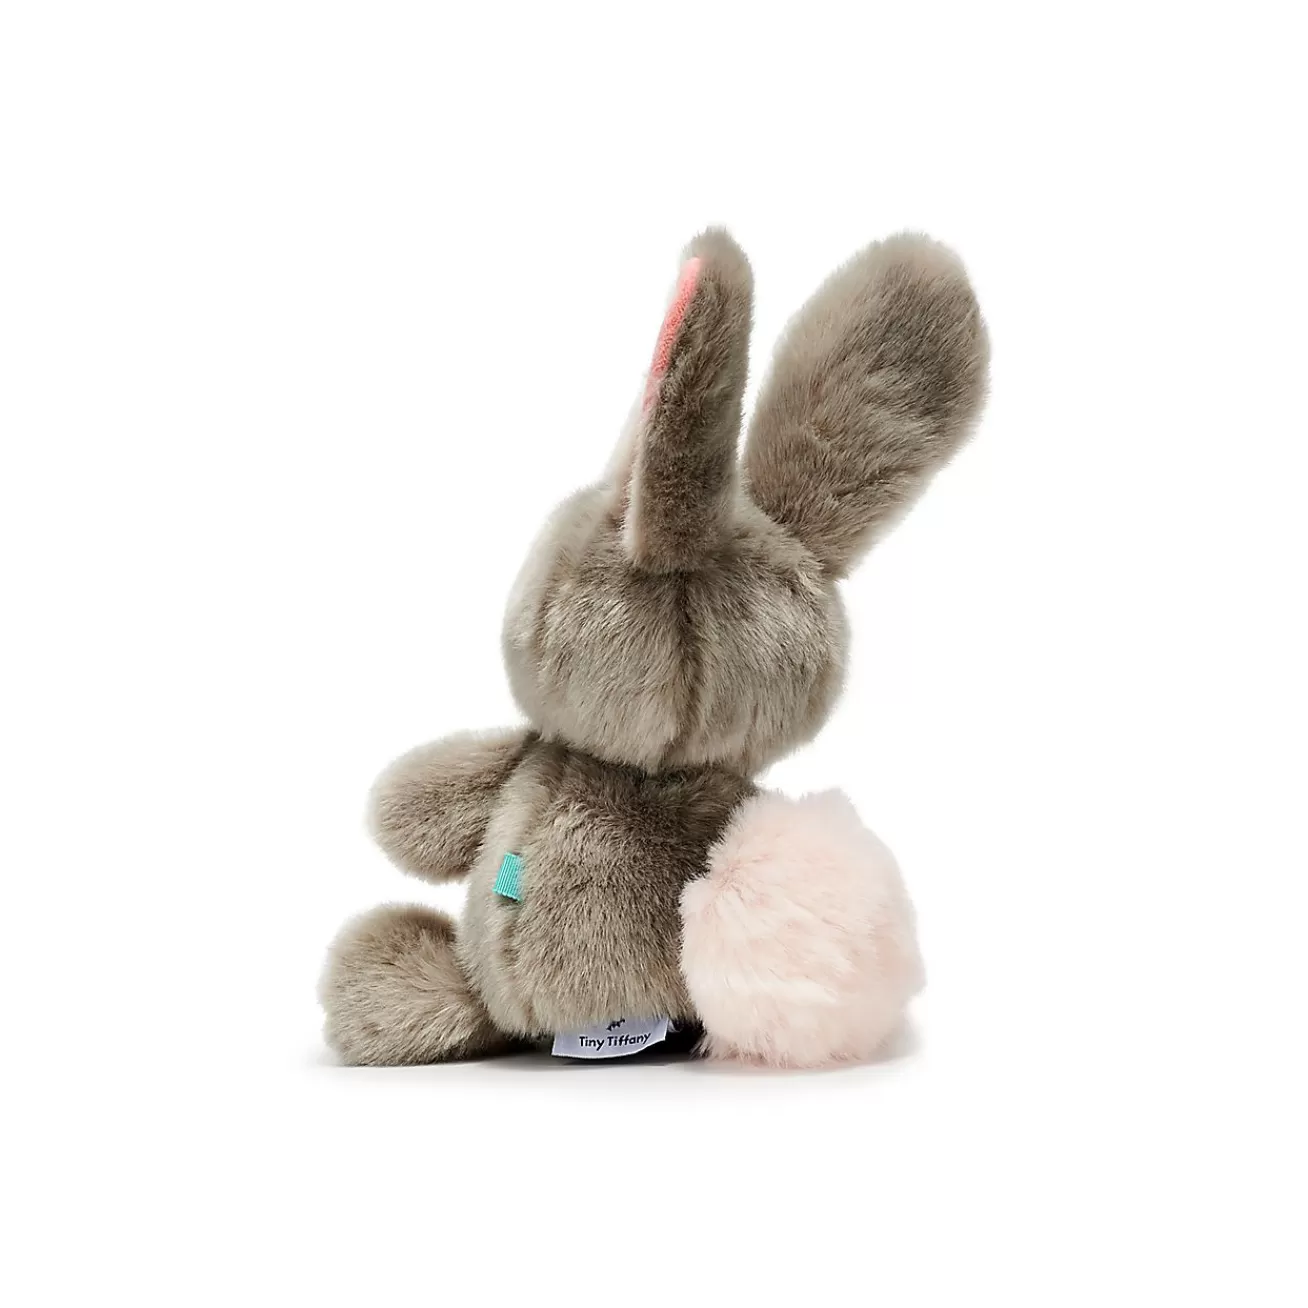 Tiffany & Co. Tiny Tiffany Hopper the Rabbit Plush Toy in a Cotton Blend | ^ Baby | Baby